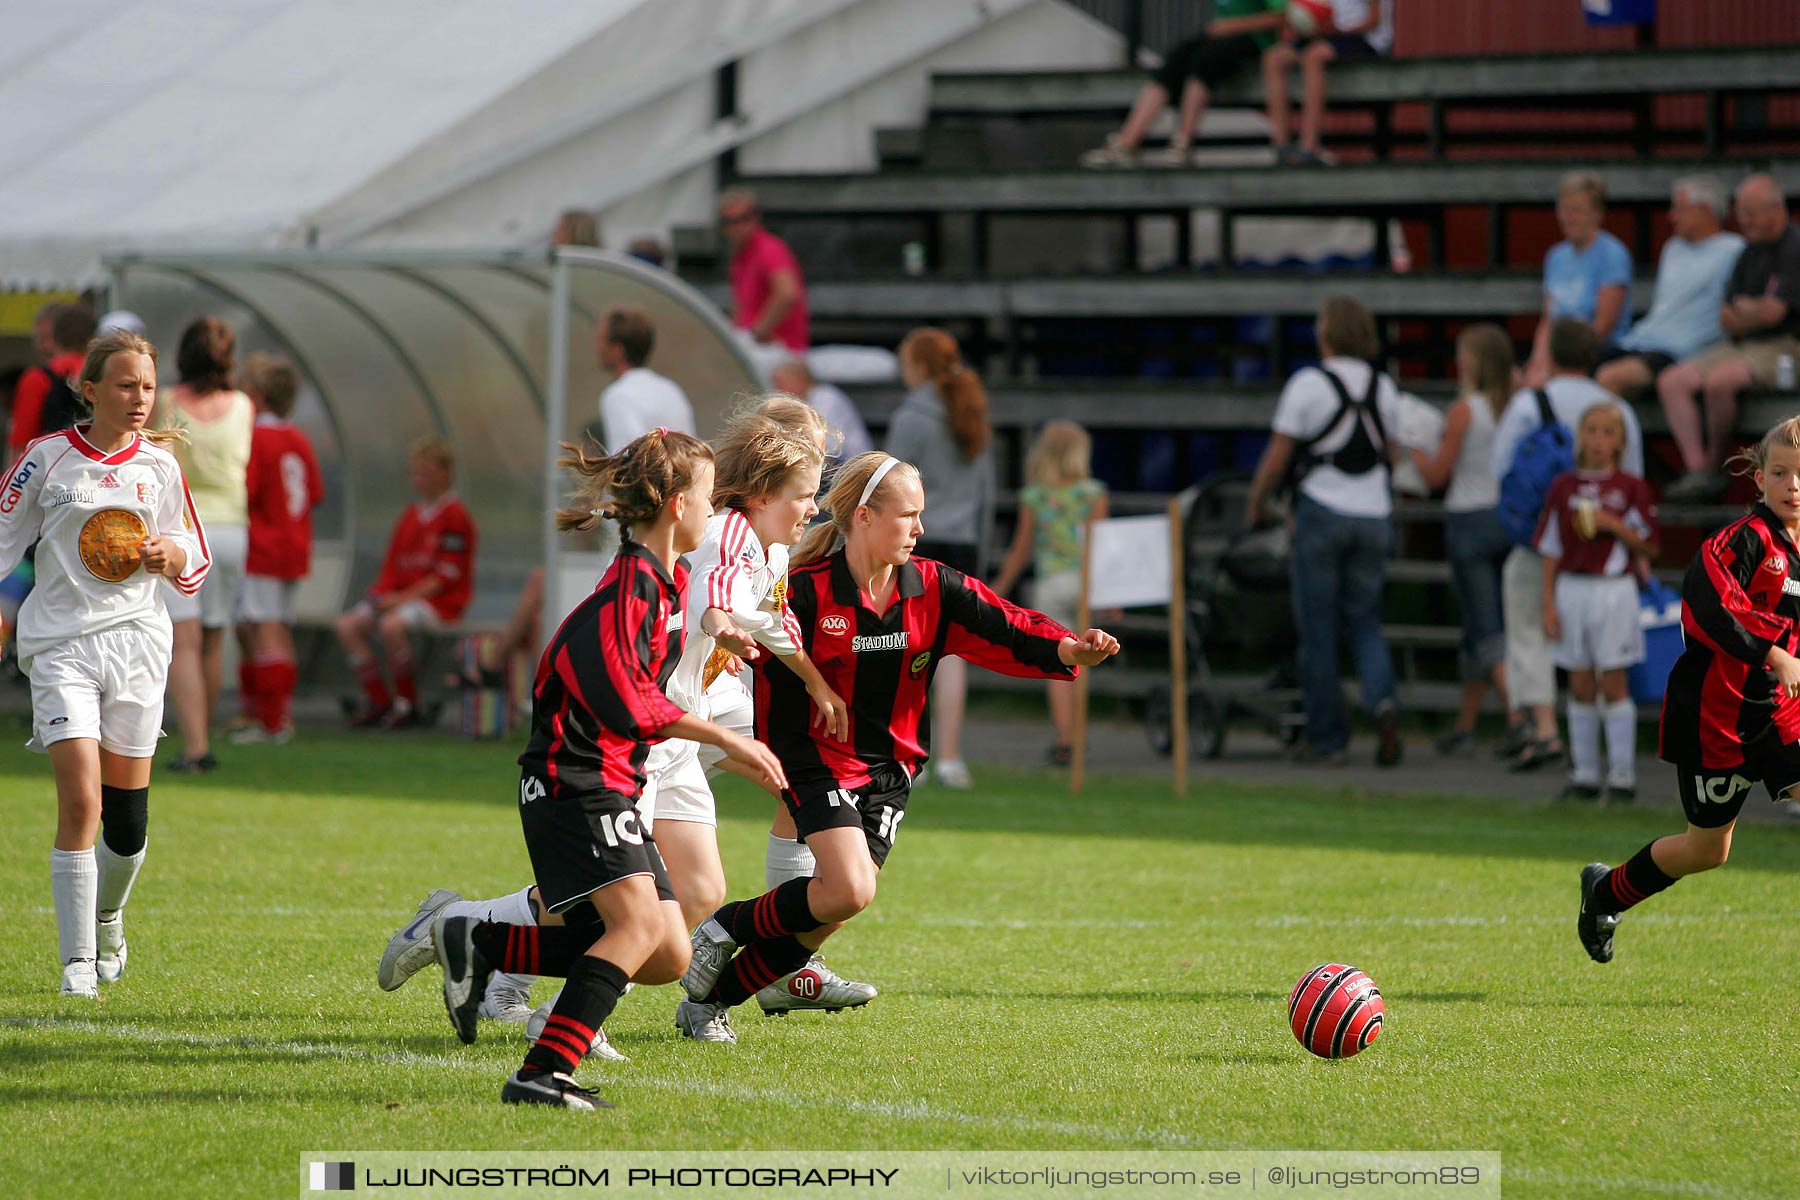 Ulvacupen 2006,mix,Åbrovallen,Ulvåker,Sverige,Fotboll,,2006,147371